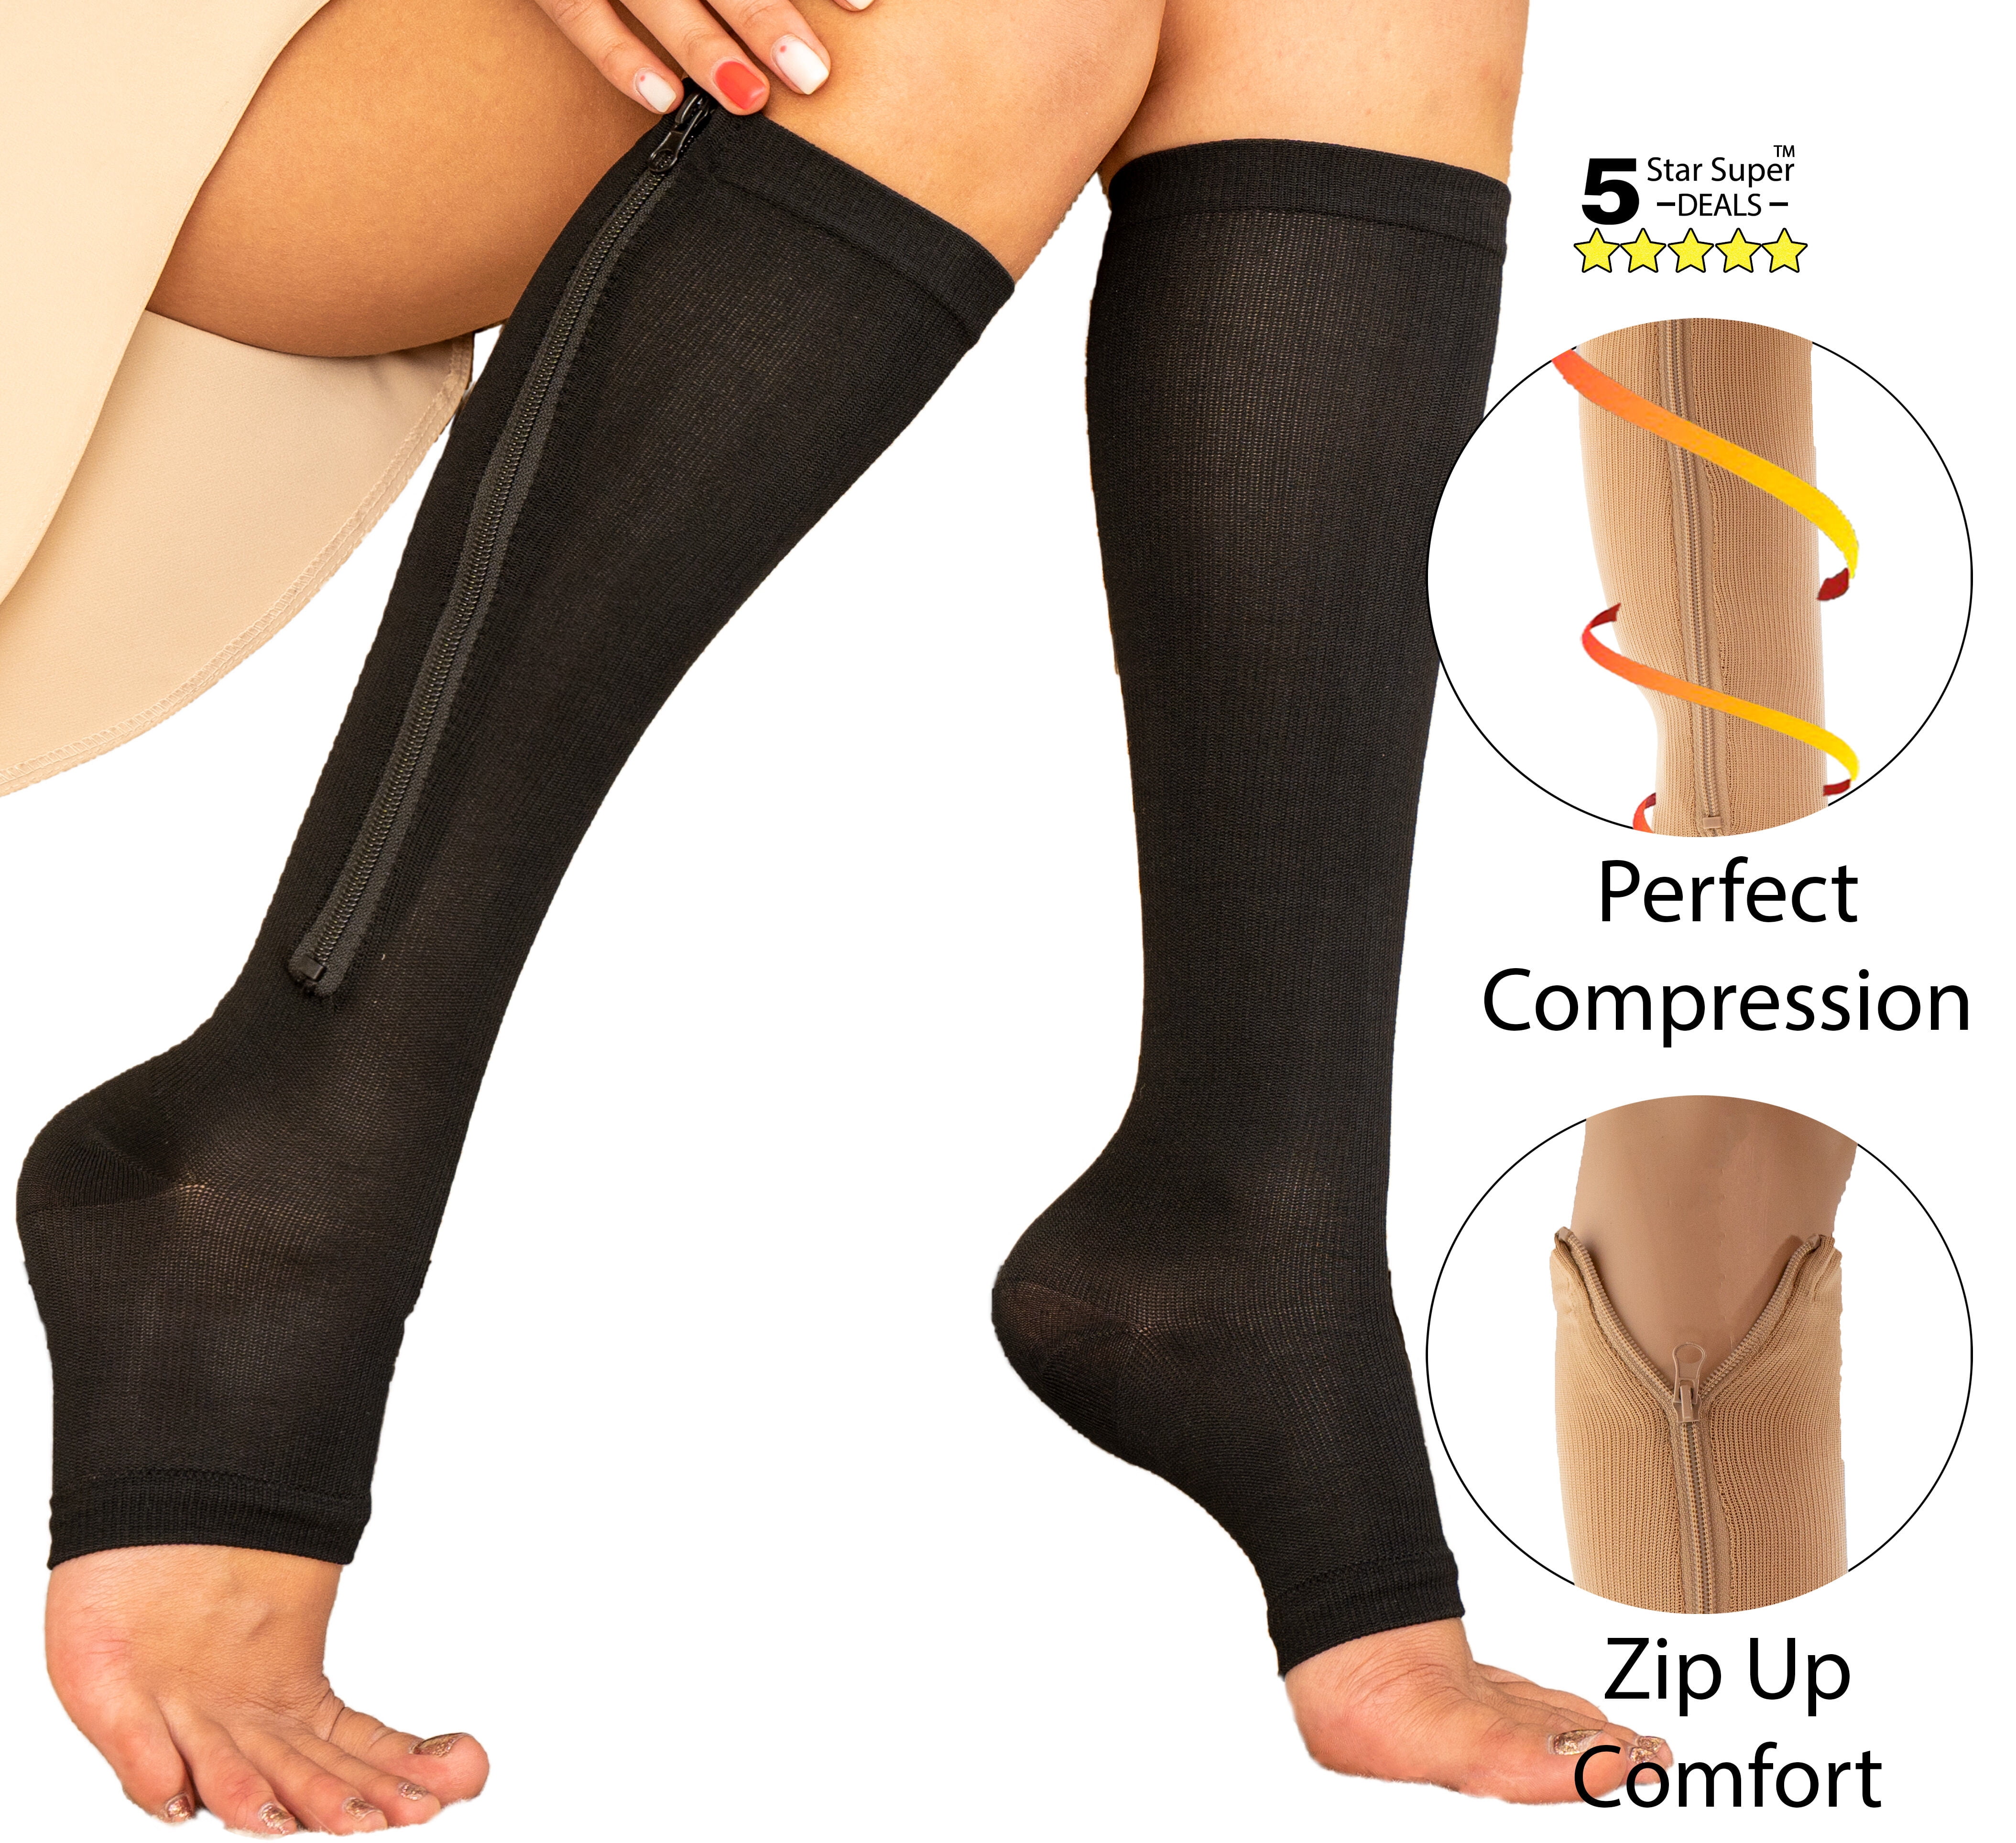 Zipper Compression Socks - Open Toe Knee High Graduated Pressure Support  Hose for Improved Leg Circulation - Unisex - Black Large Size - 5 Star  Super Deals 